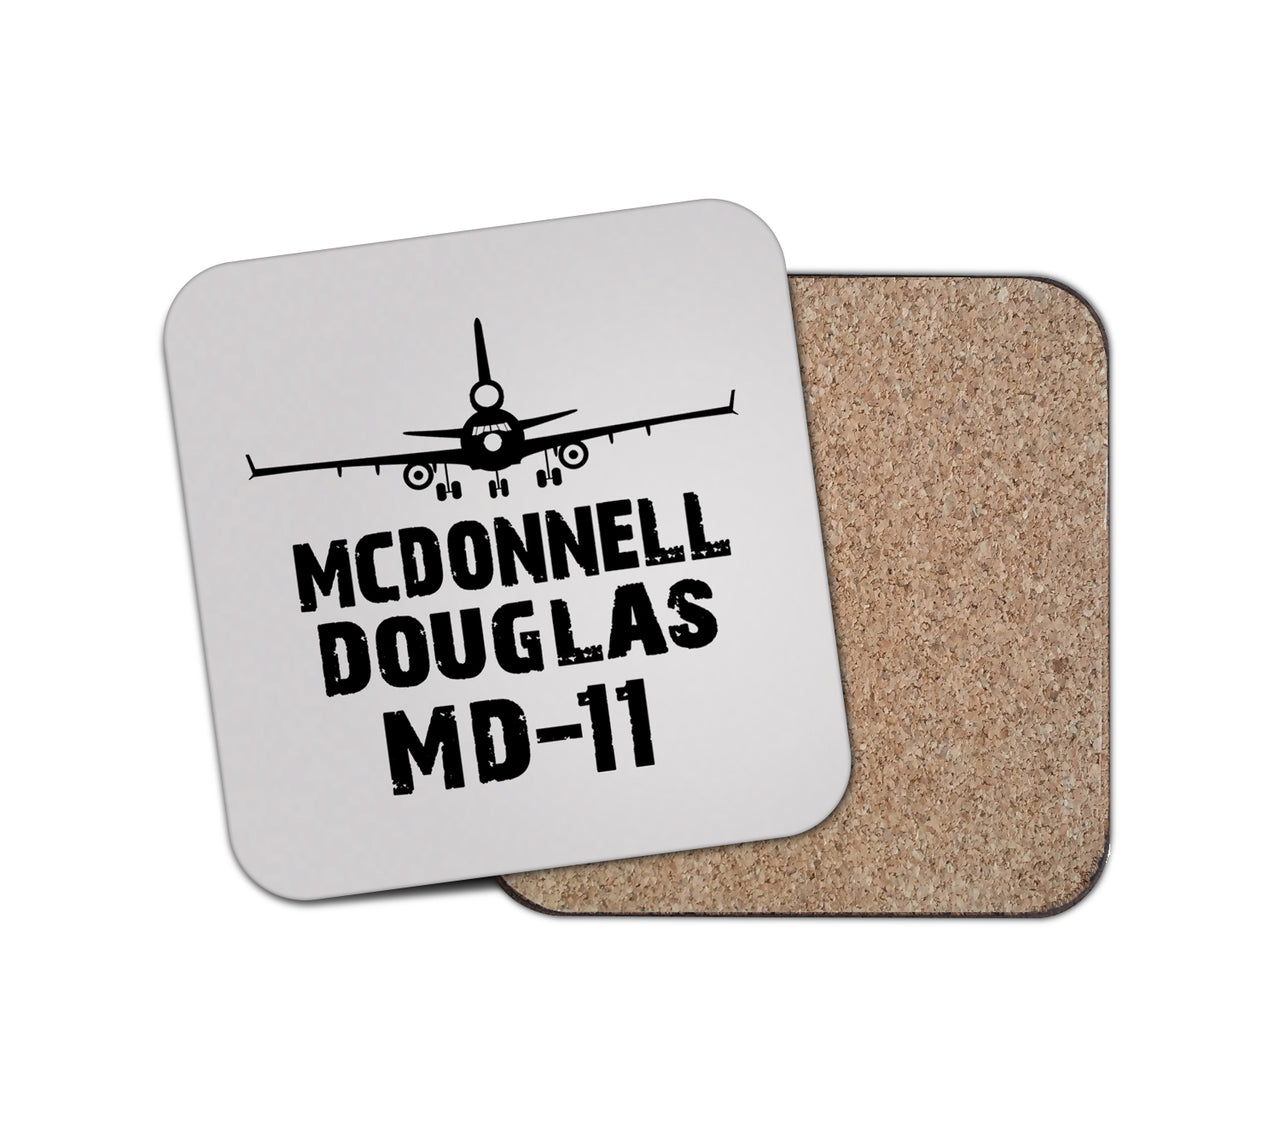 McDonnell Douglas MD-11 & Plane Designed Coasters